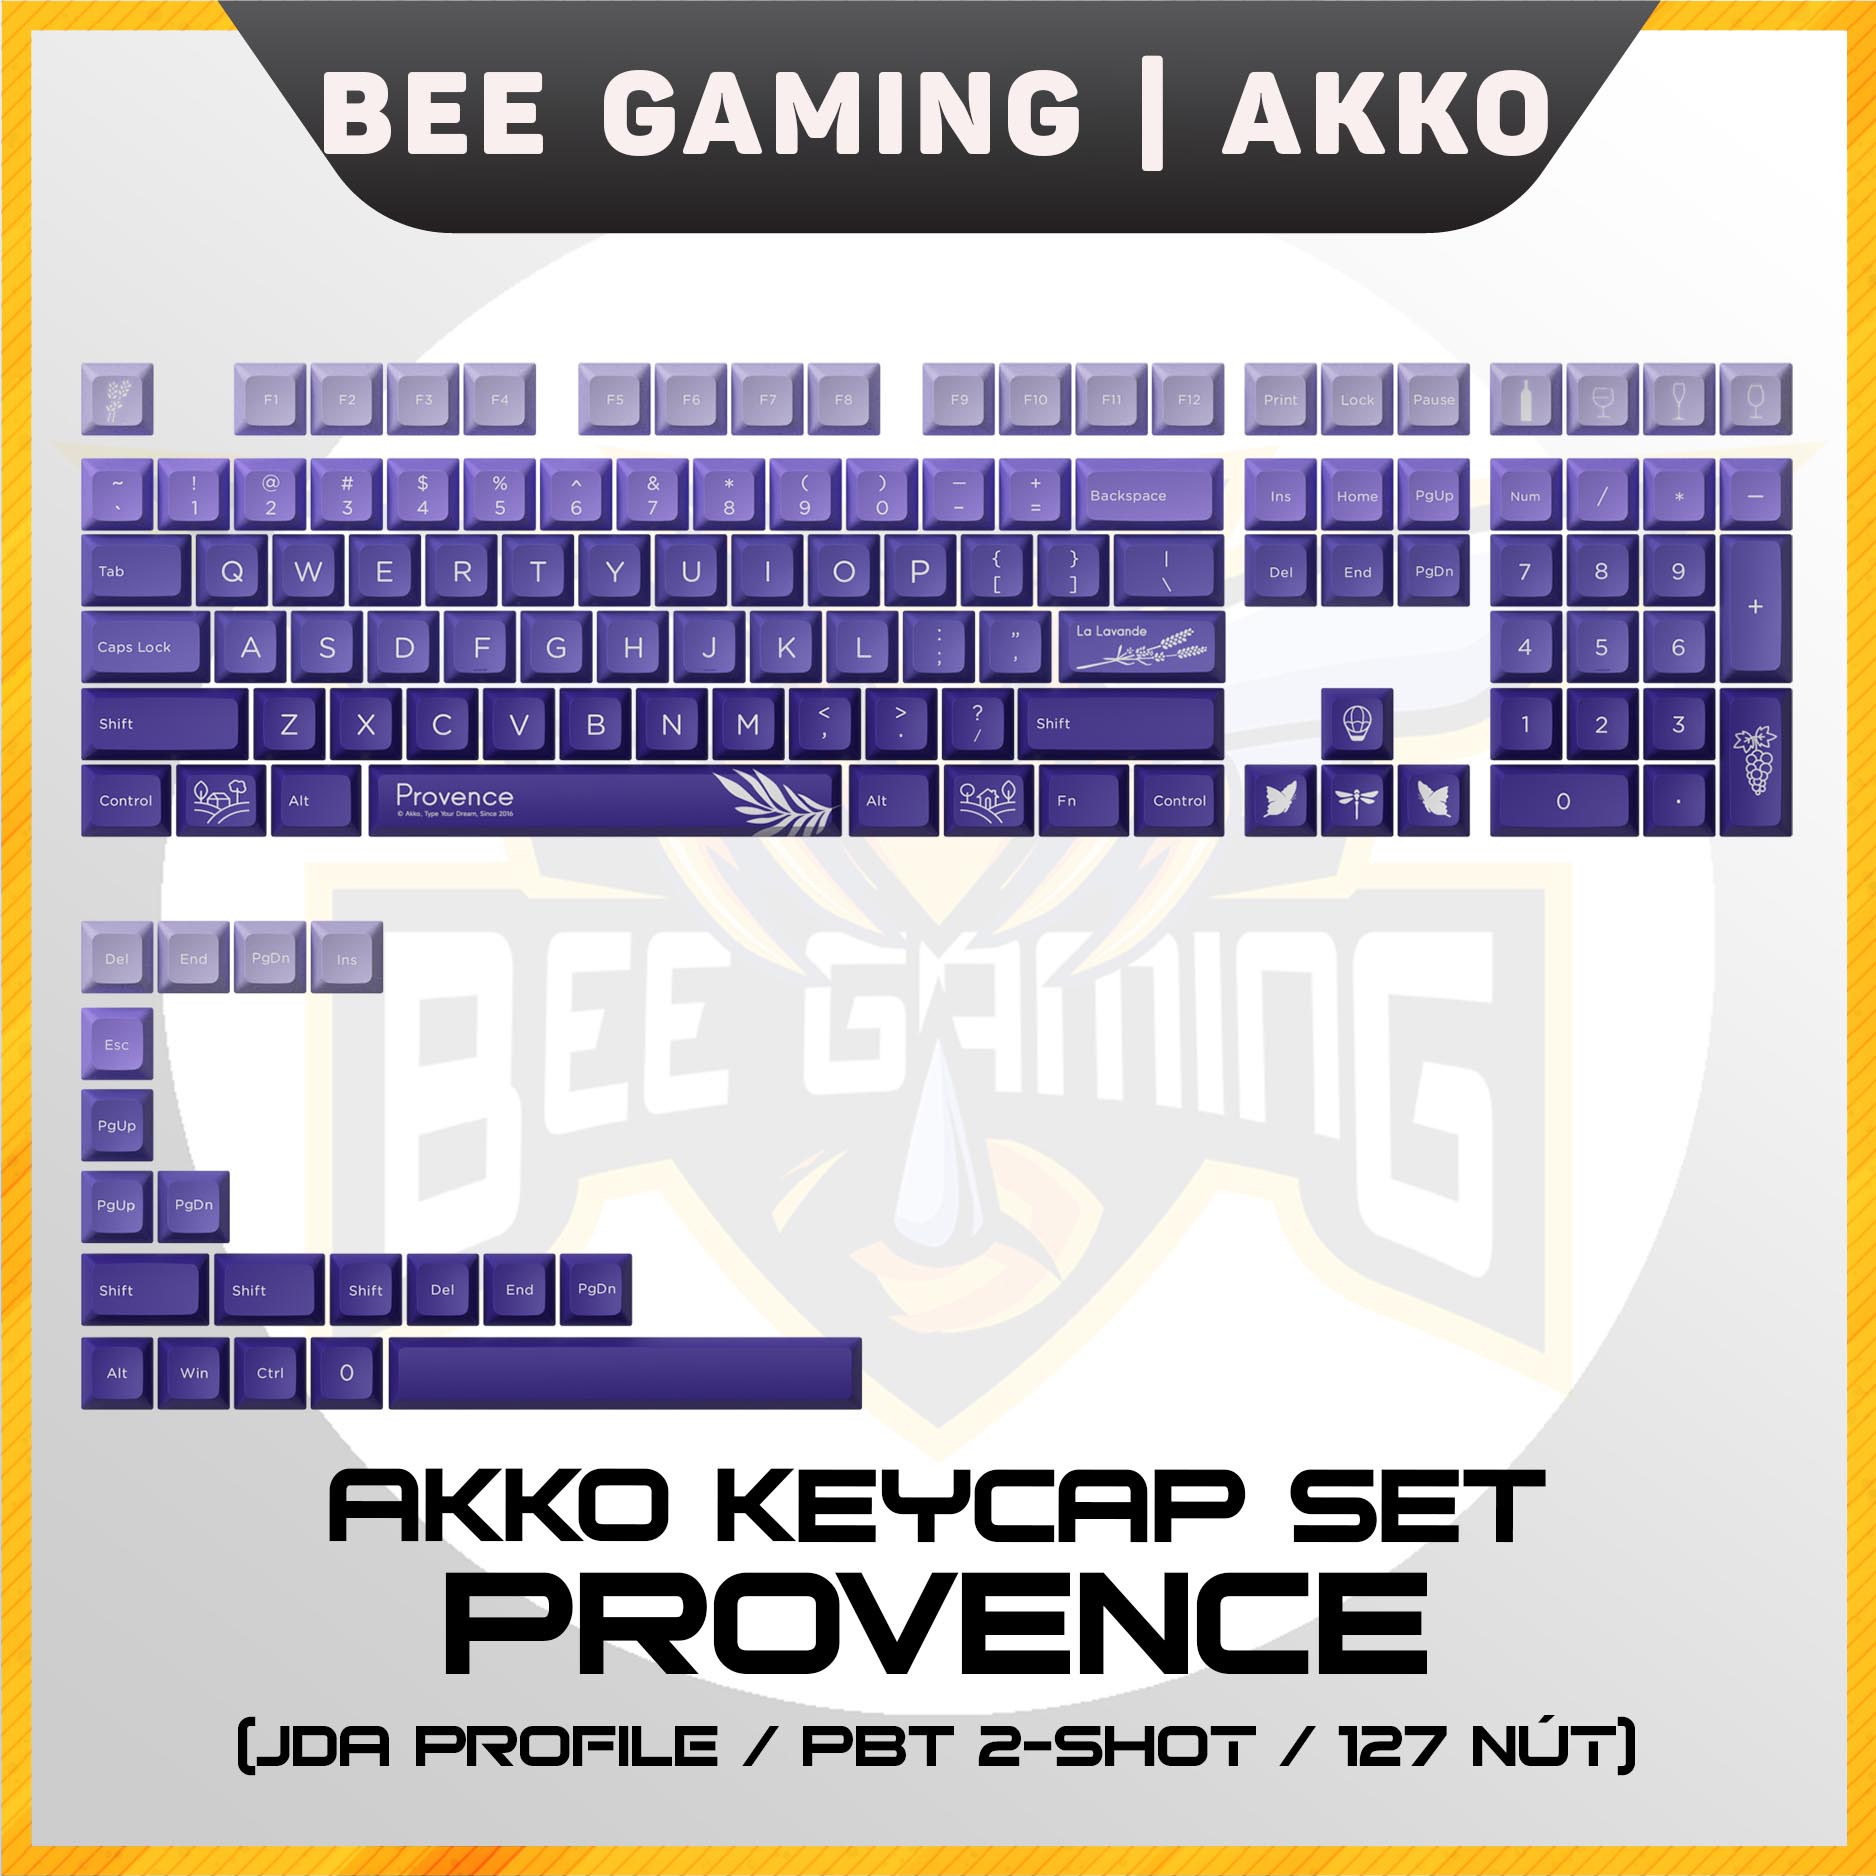 akko-keycap-set-provence-jda-profile-beegaming-1